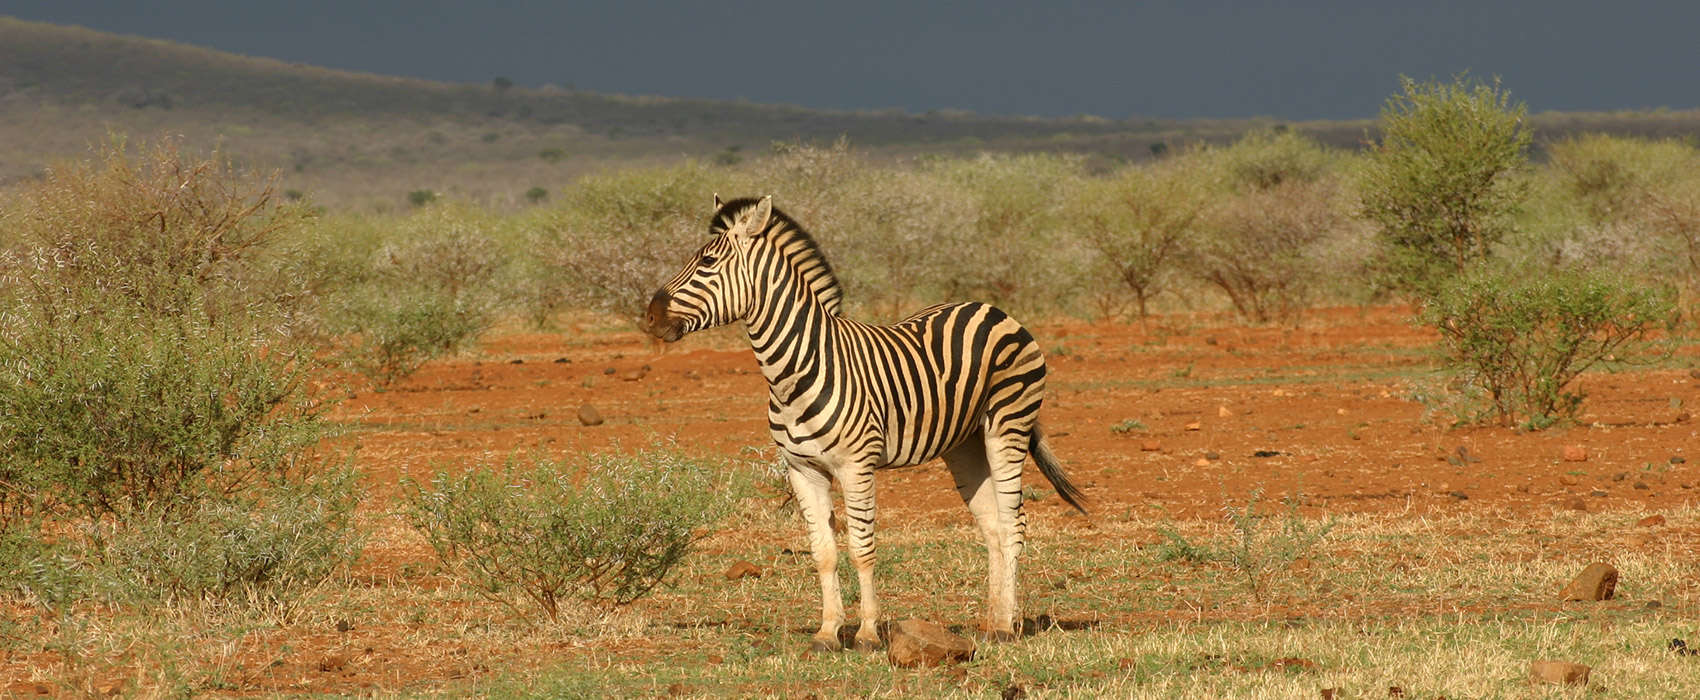 African Madikwe Safari zebras